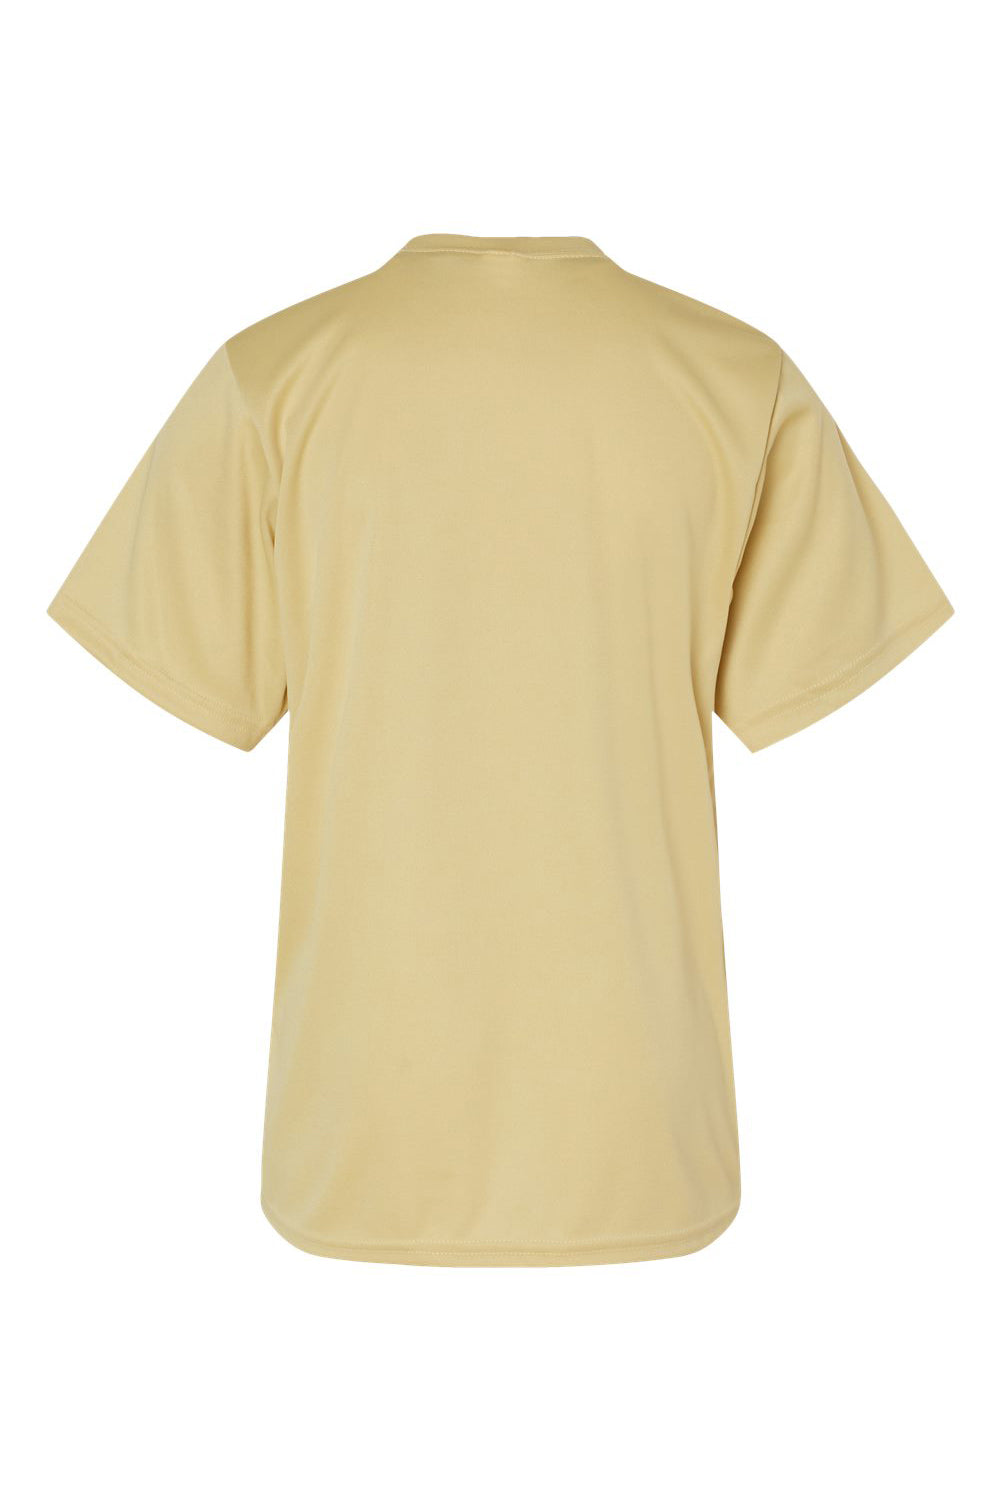 C2 Sport 5200 Youth Performance Moisture Wicking Short Sleeve Crewneck T-Shirt Vegas Gold Flat Back